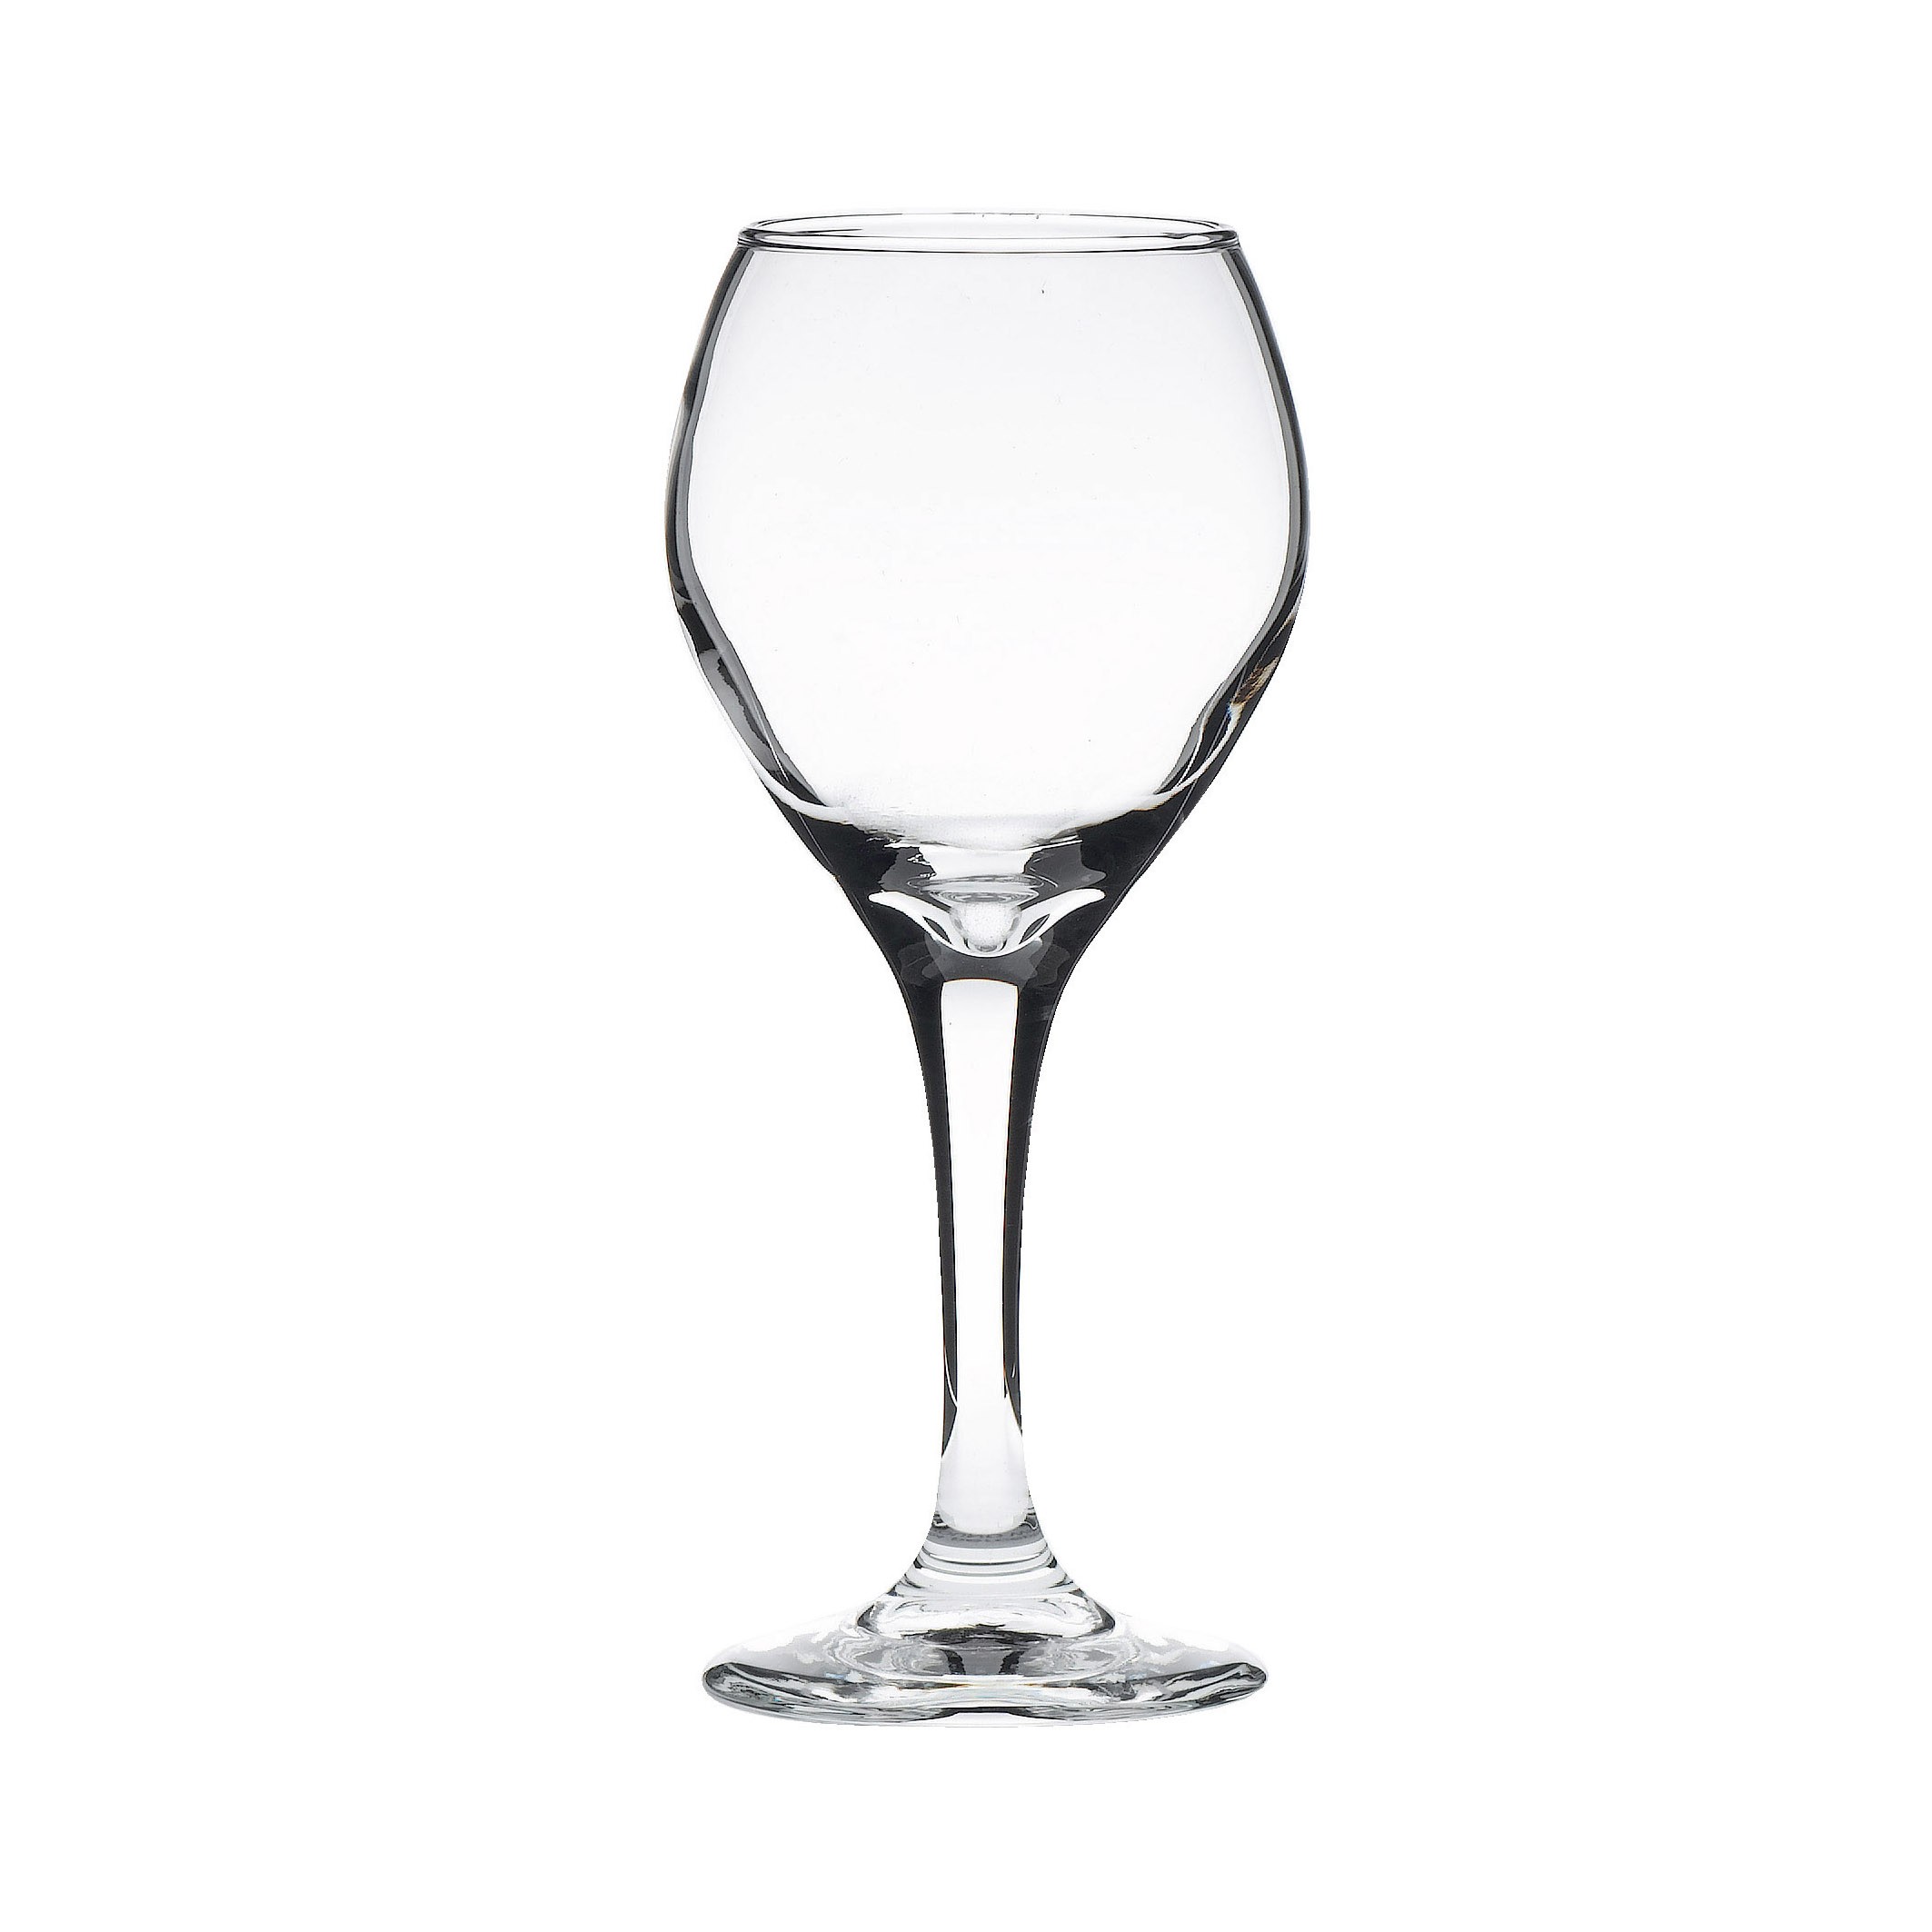 Perception Wine Glasses 11oz LCE at 175ml 